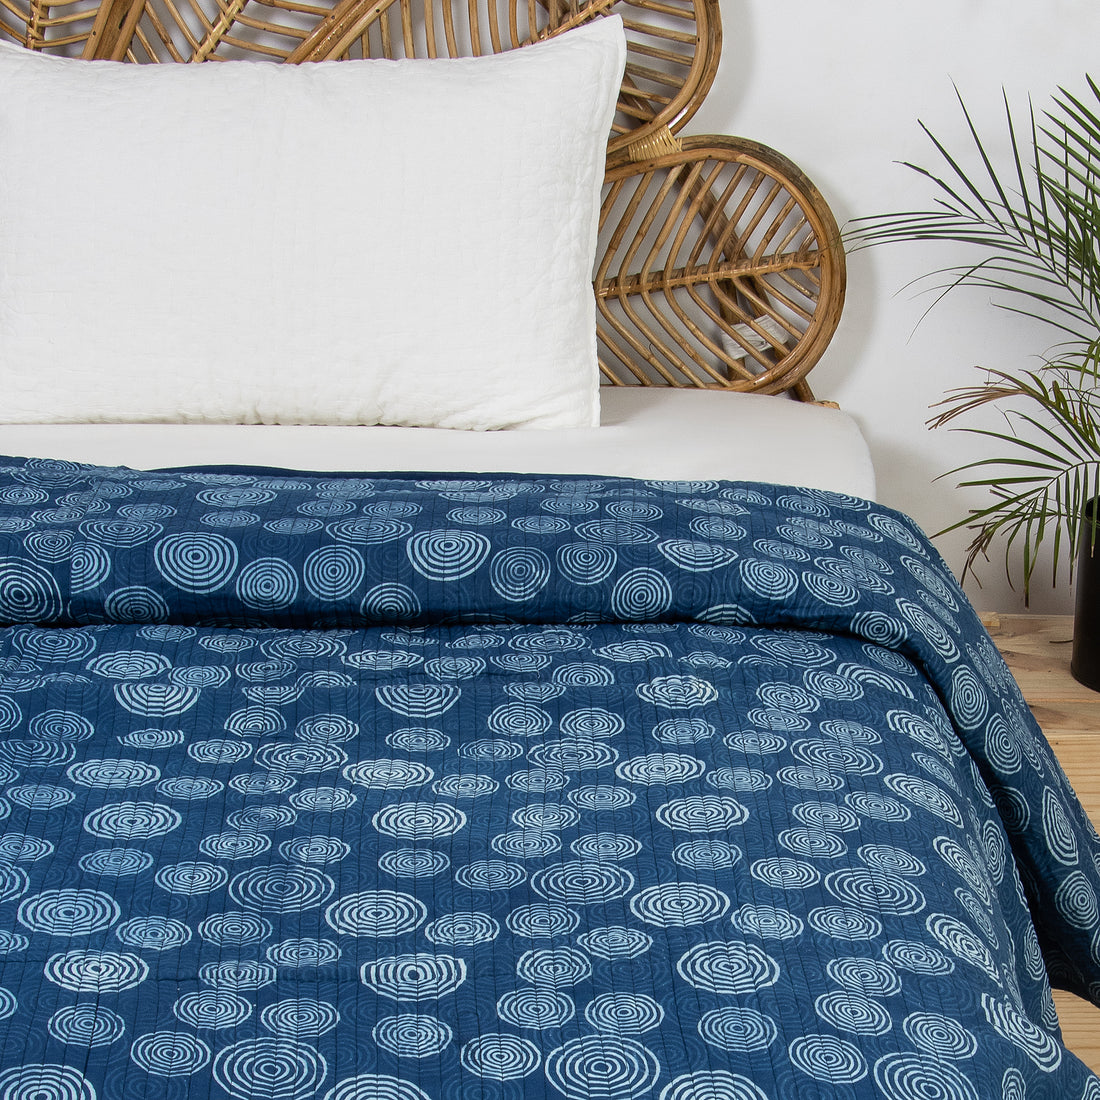 Handmade Indigo Blue Soft Cotton Jaipuri Quilt